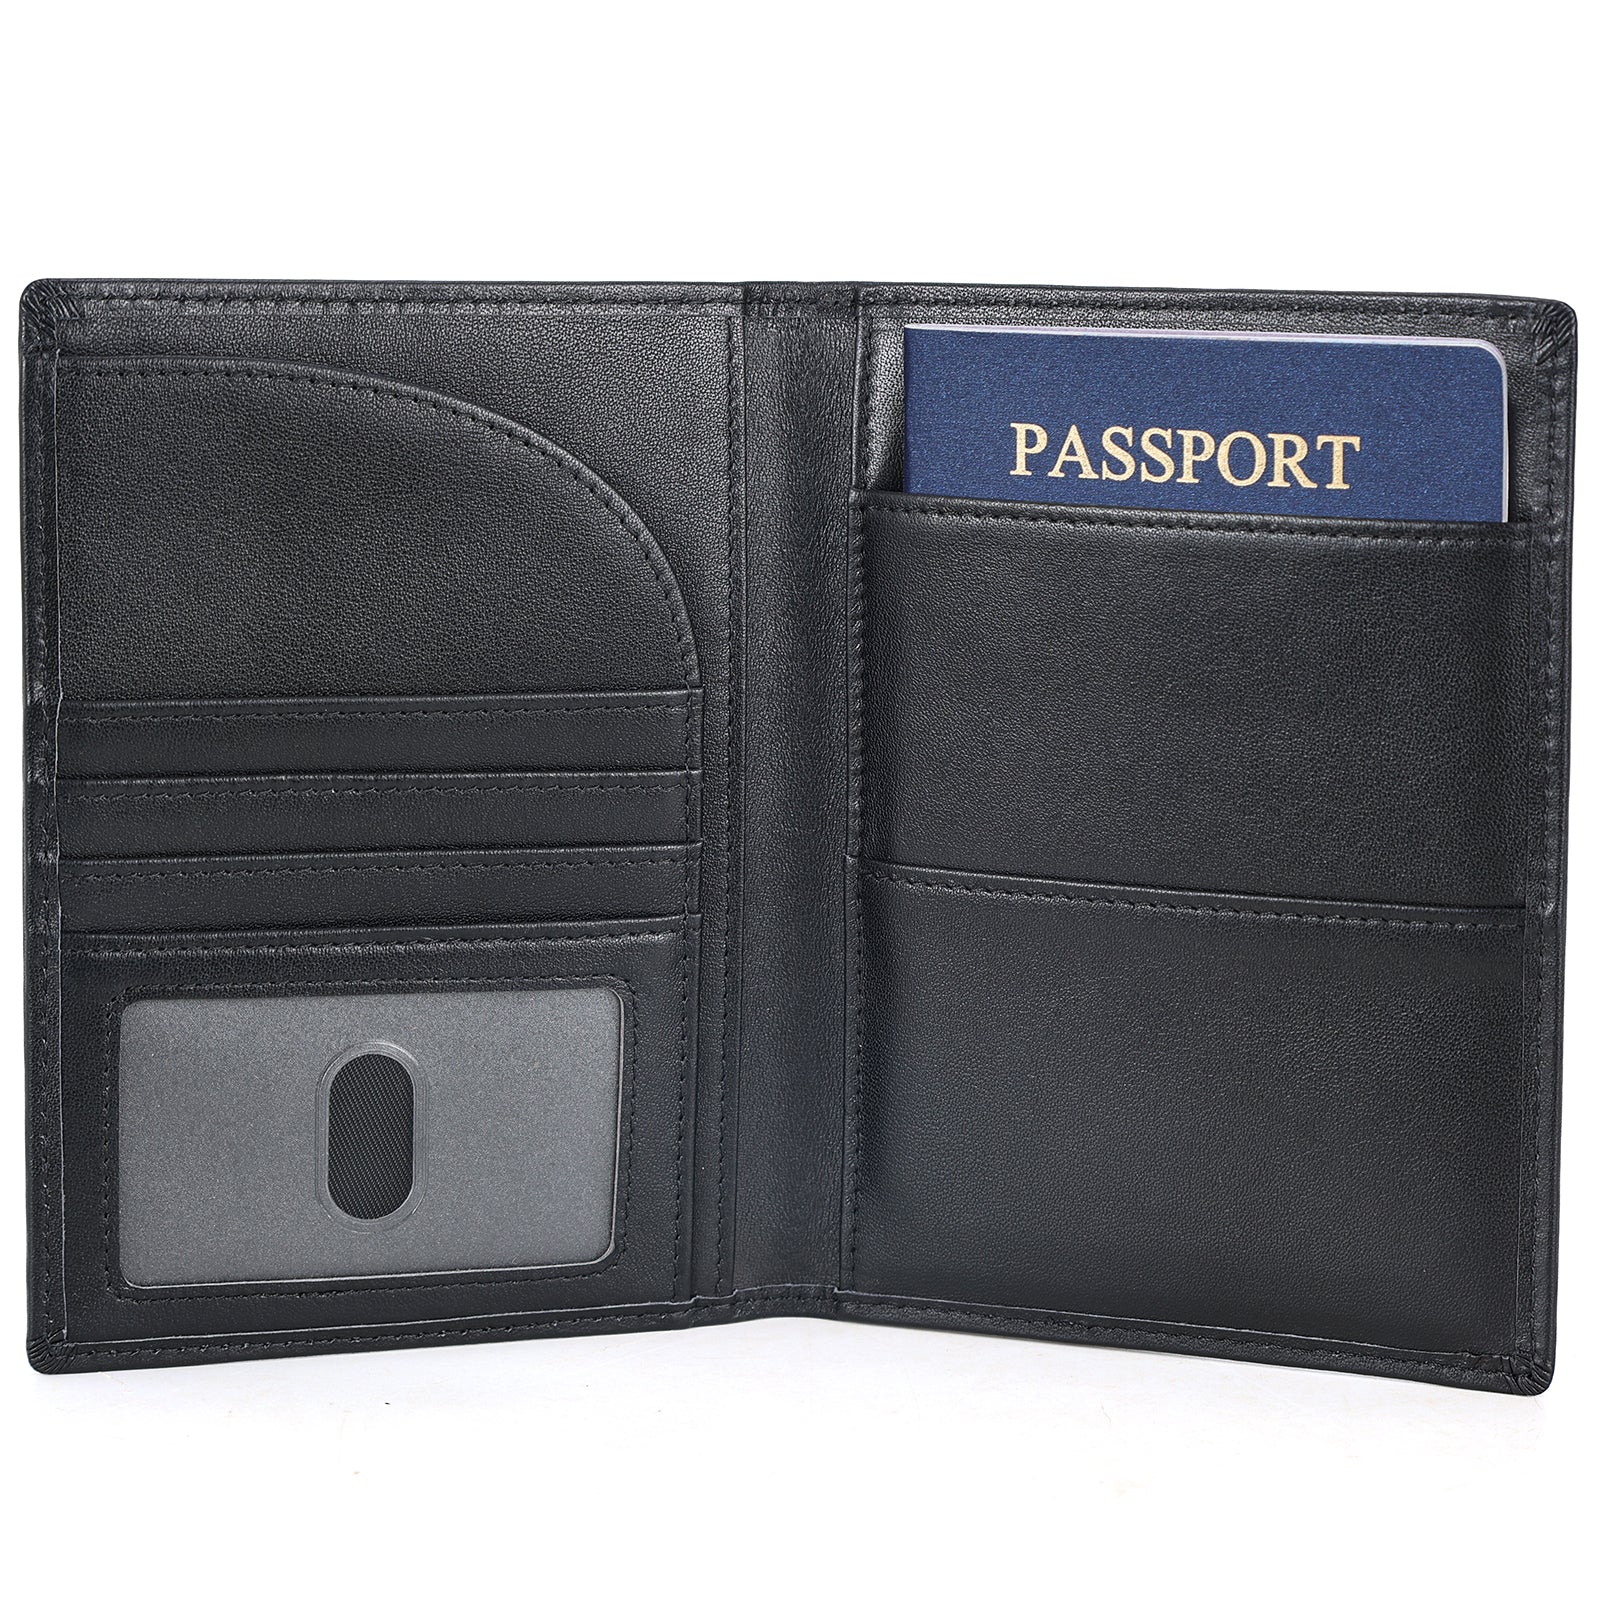 Polare Full Grain Leather Travel Passport Holder with YKK Zipper Pocket Snap Passports Cover RFID Blocking Passport Wallet Holders 2 Passports